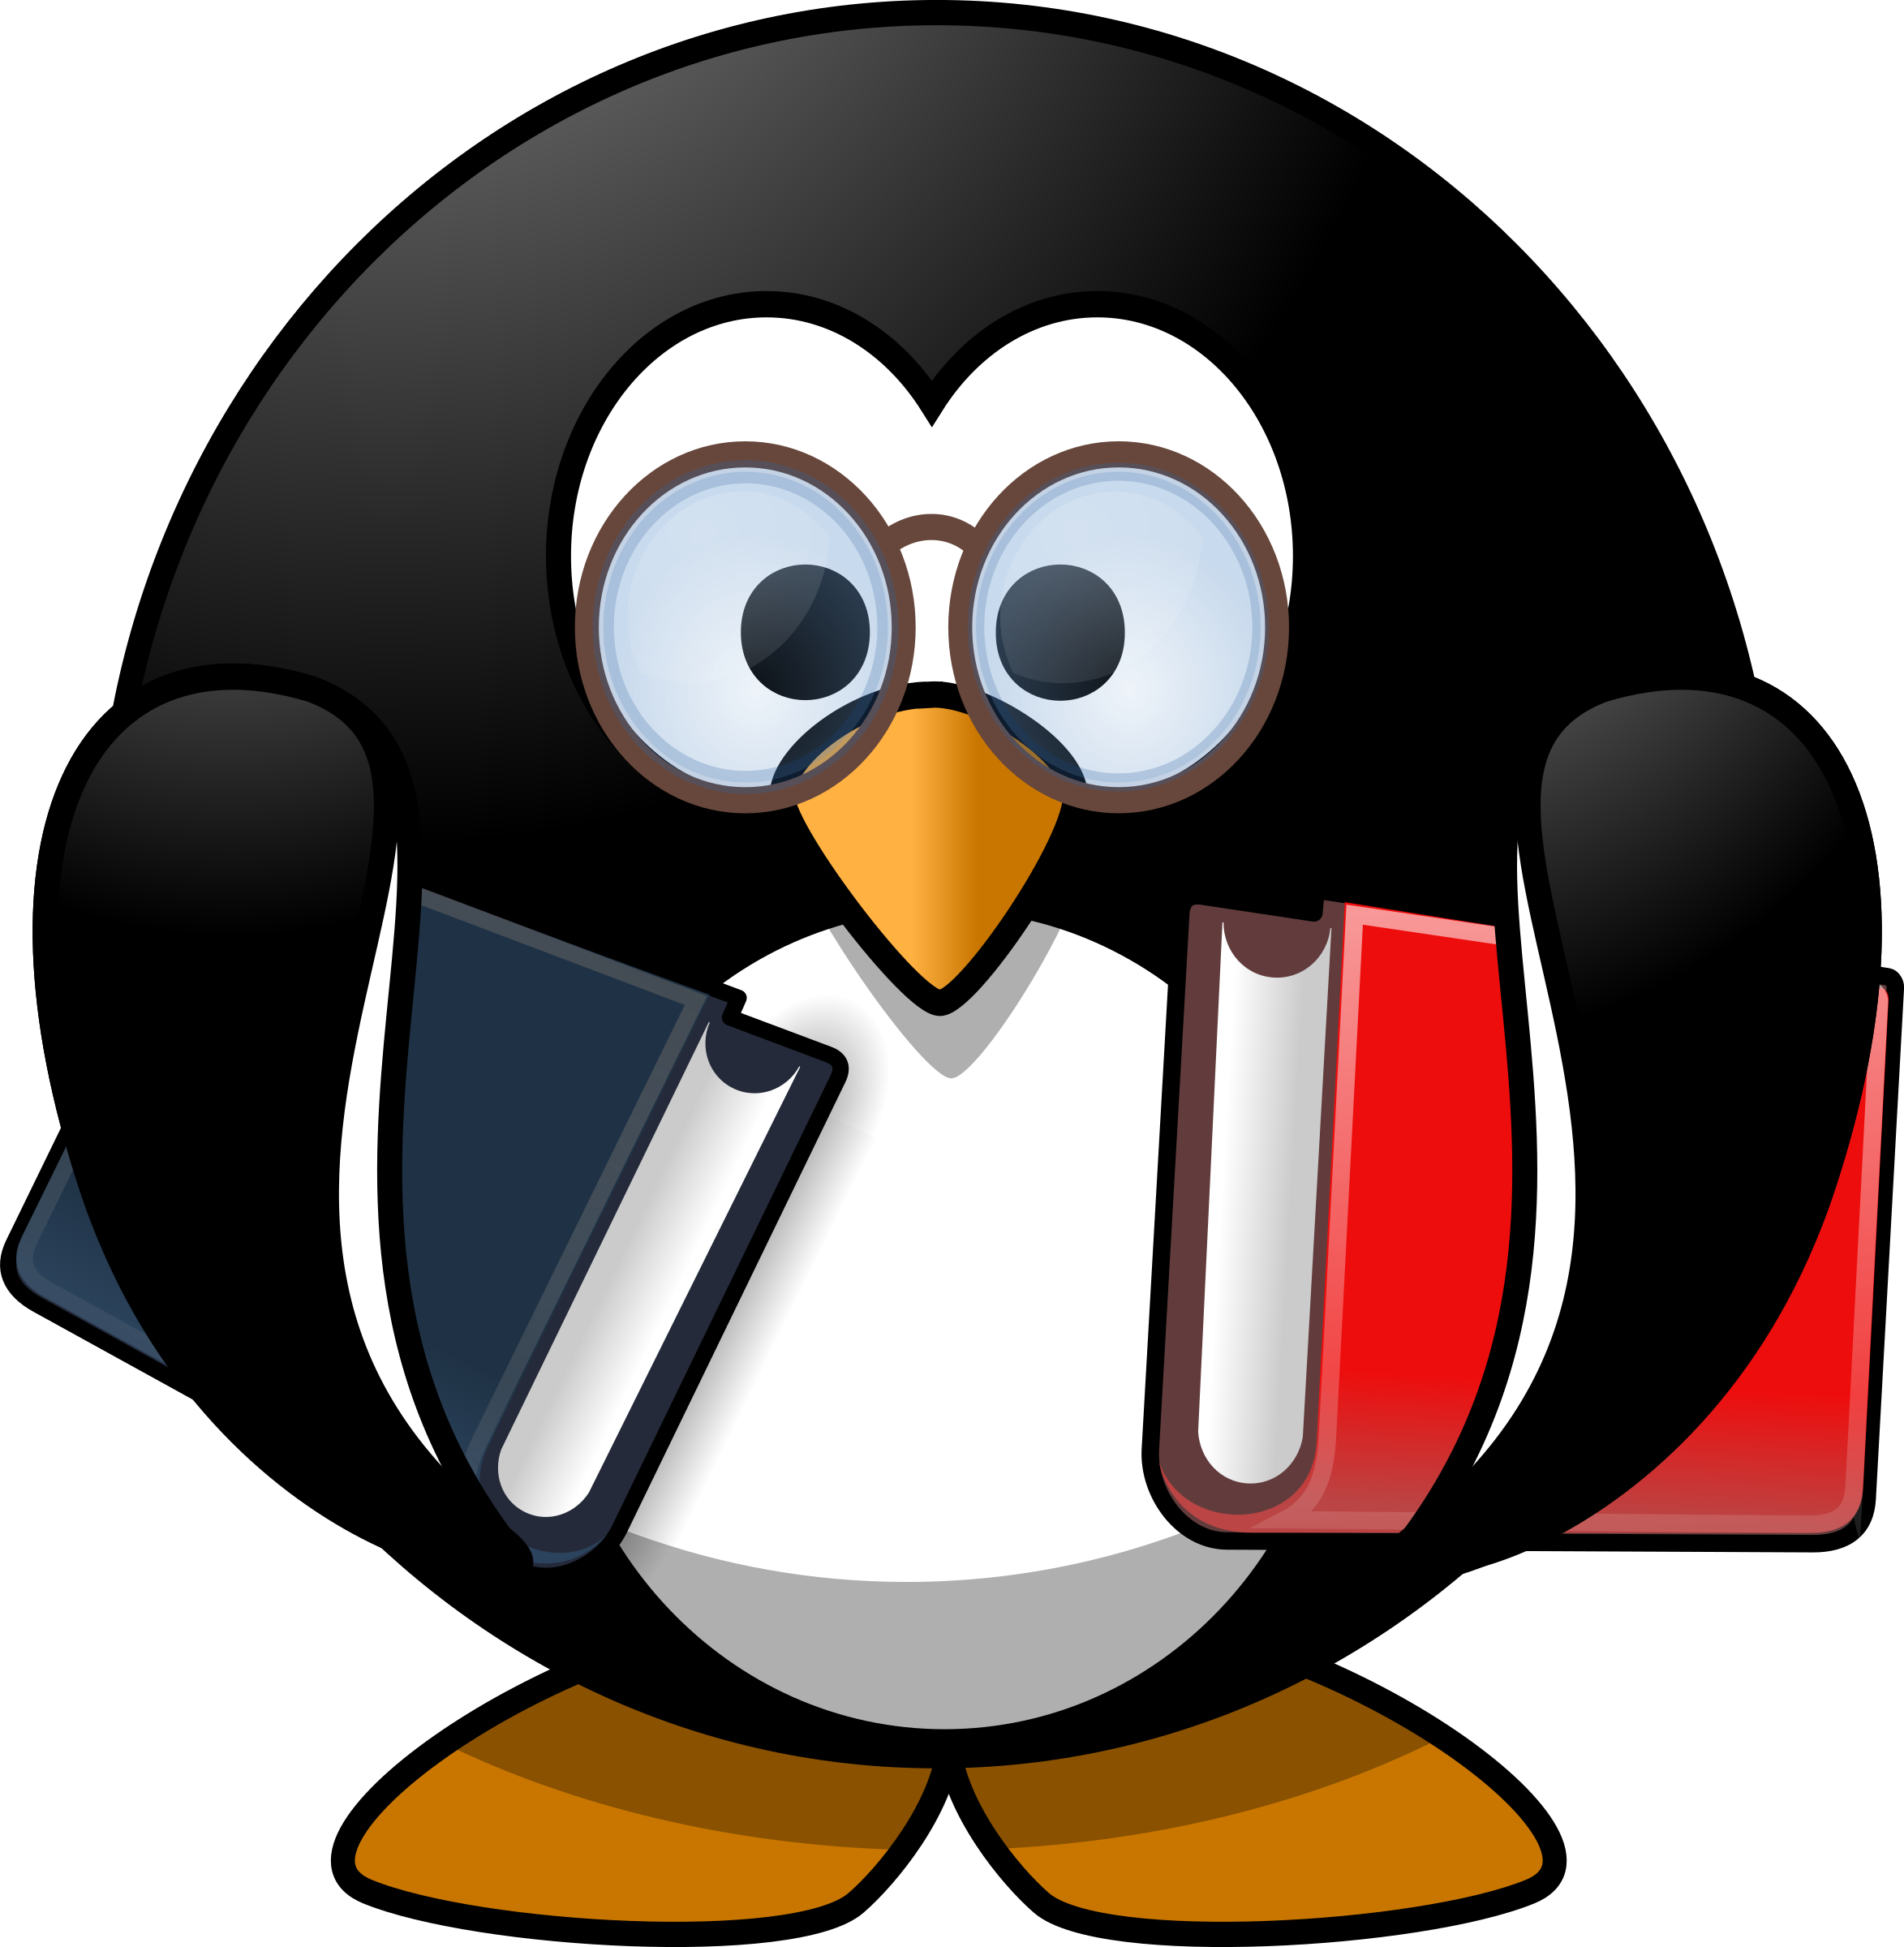 Tux the Penguin reading books